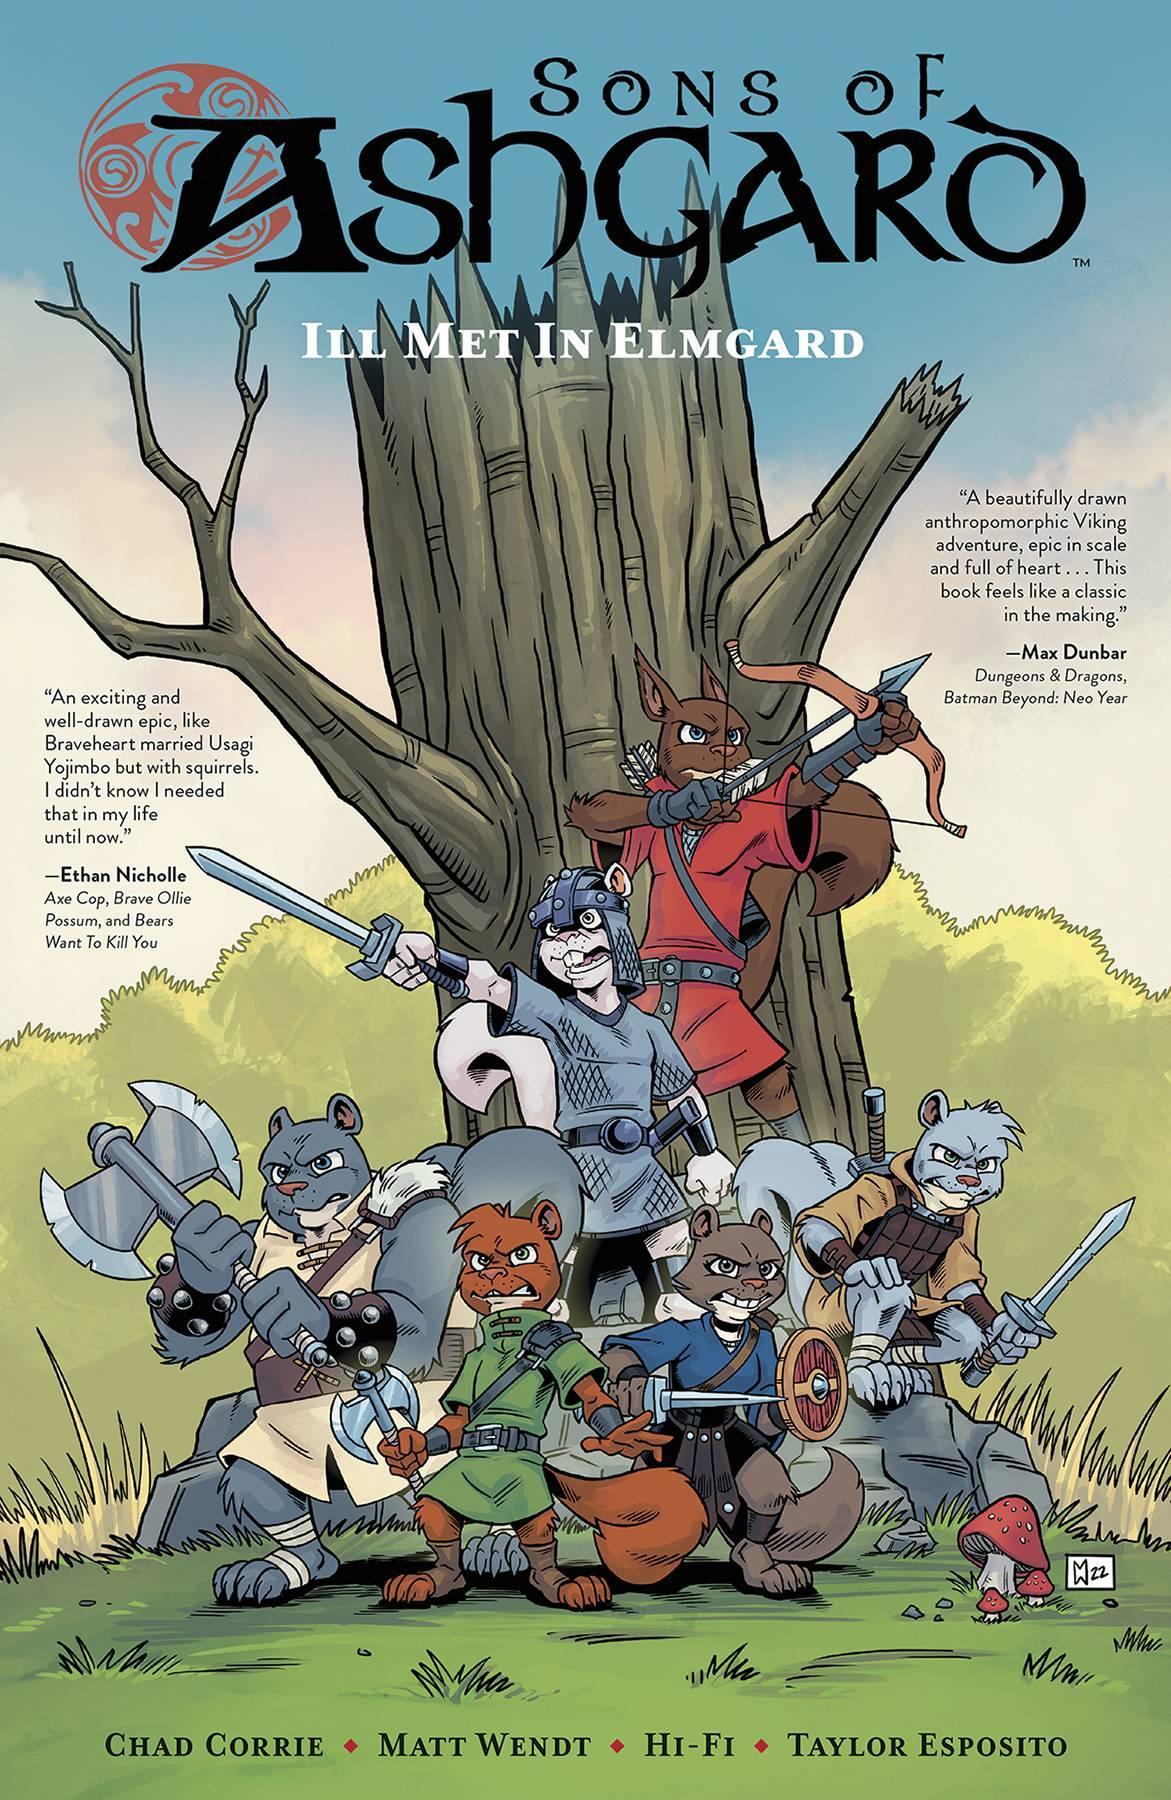 SONS OF ASHGARD ILL MET IN ELMGARD TP - Kings Comics